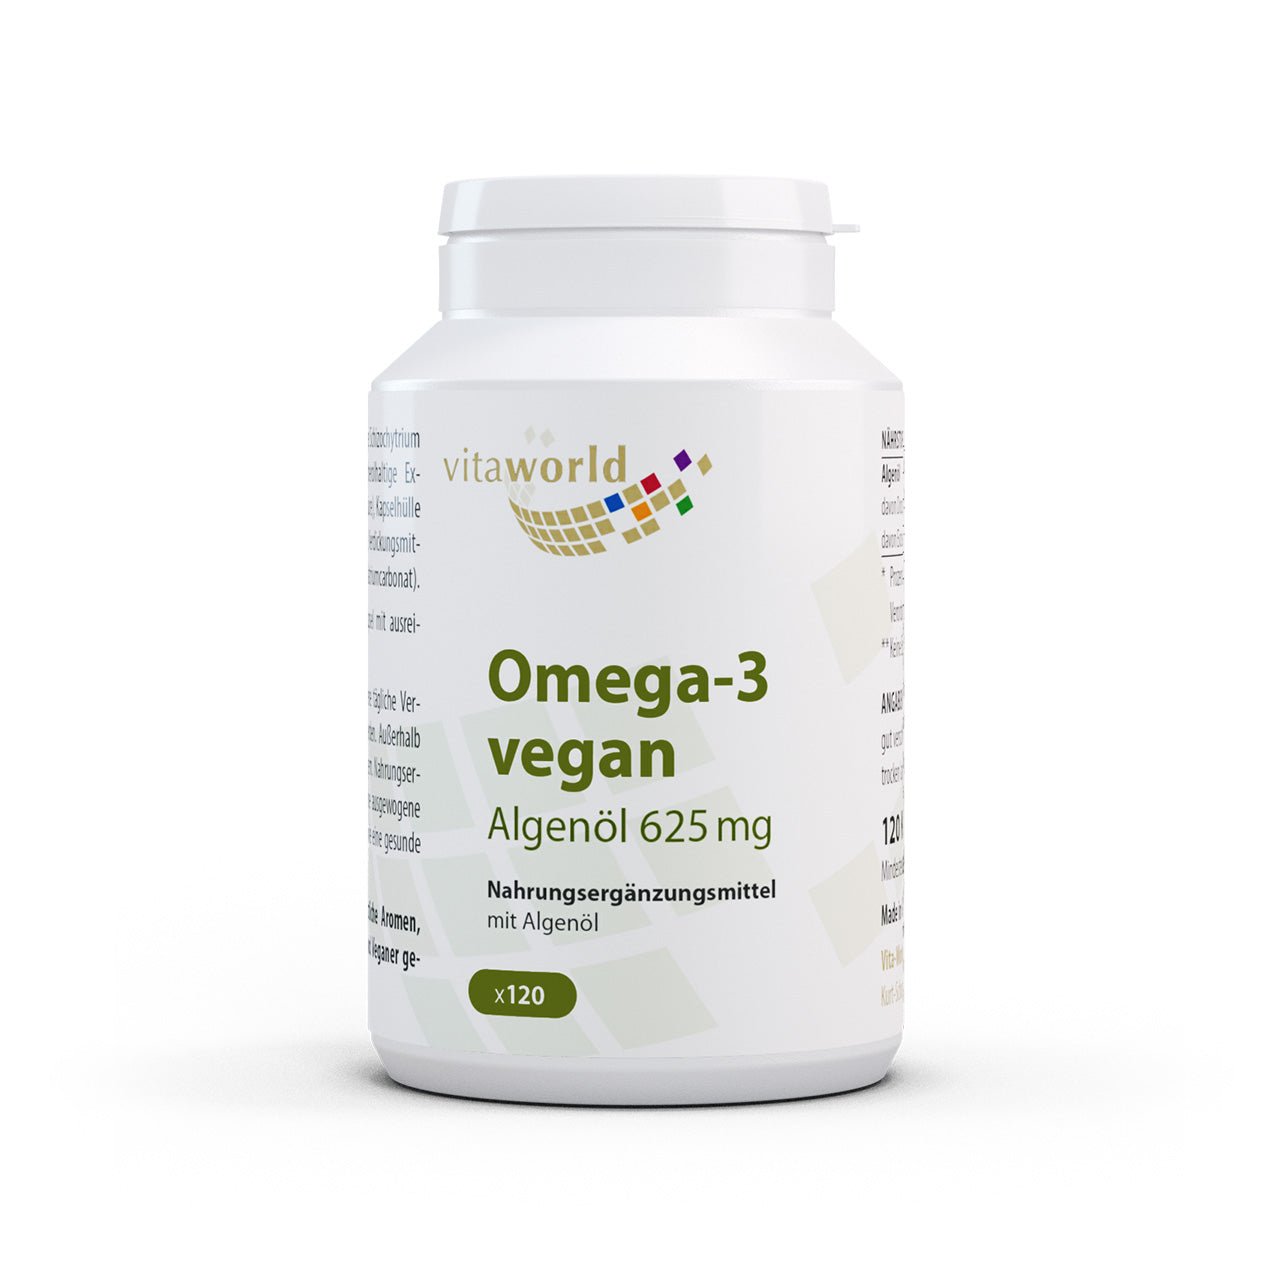 Omega 3 vegan (120 caps)